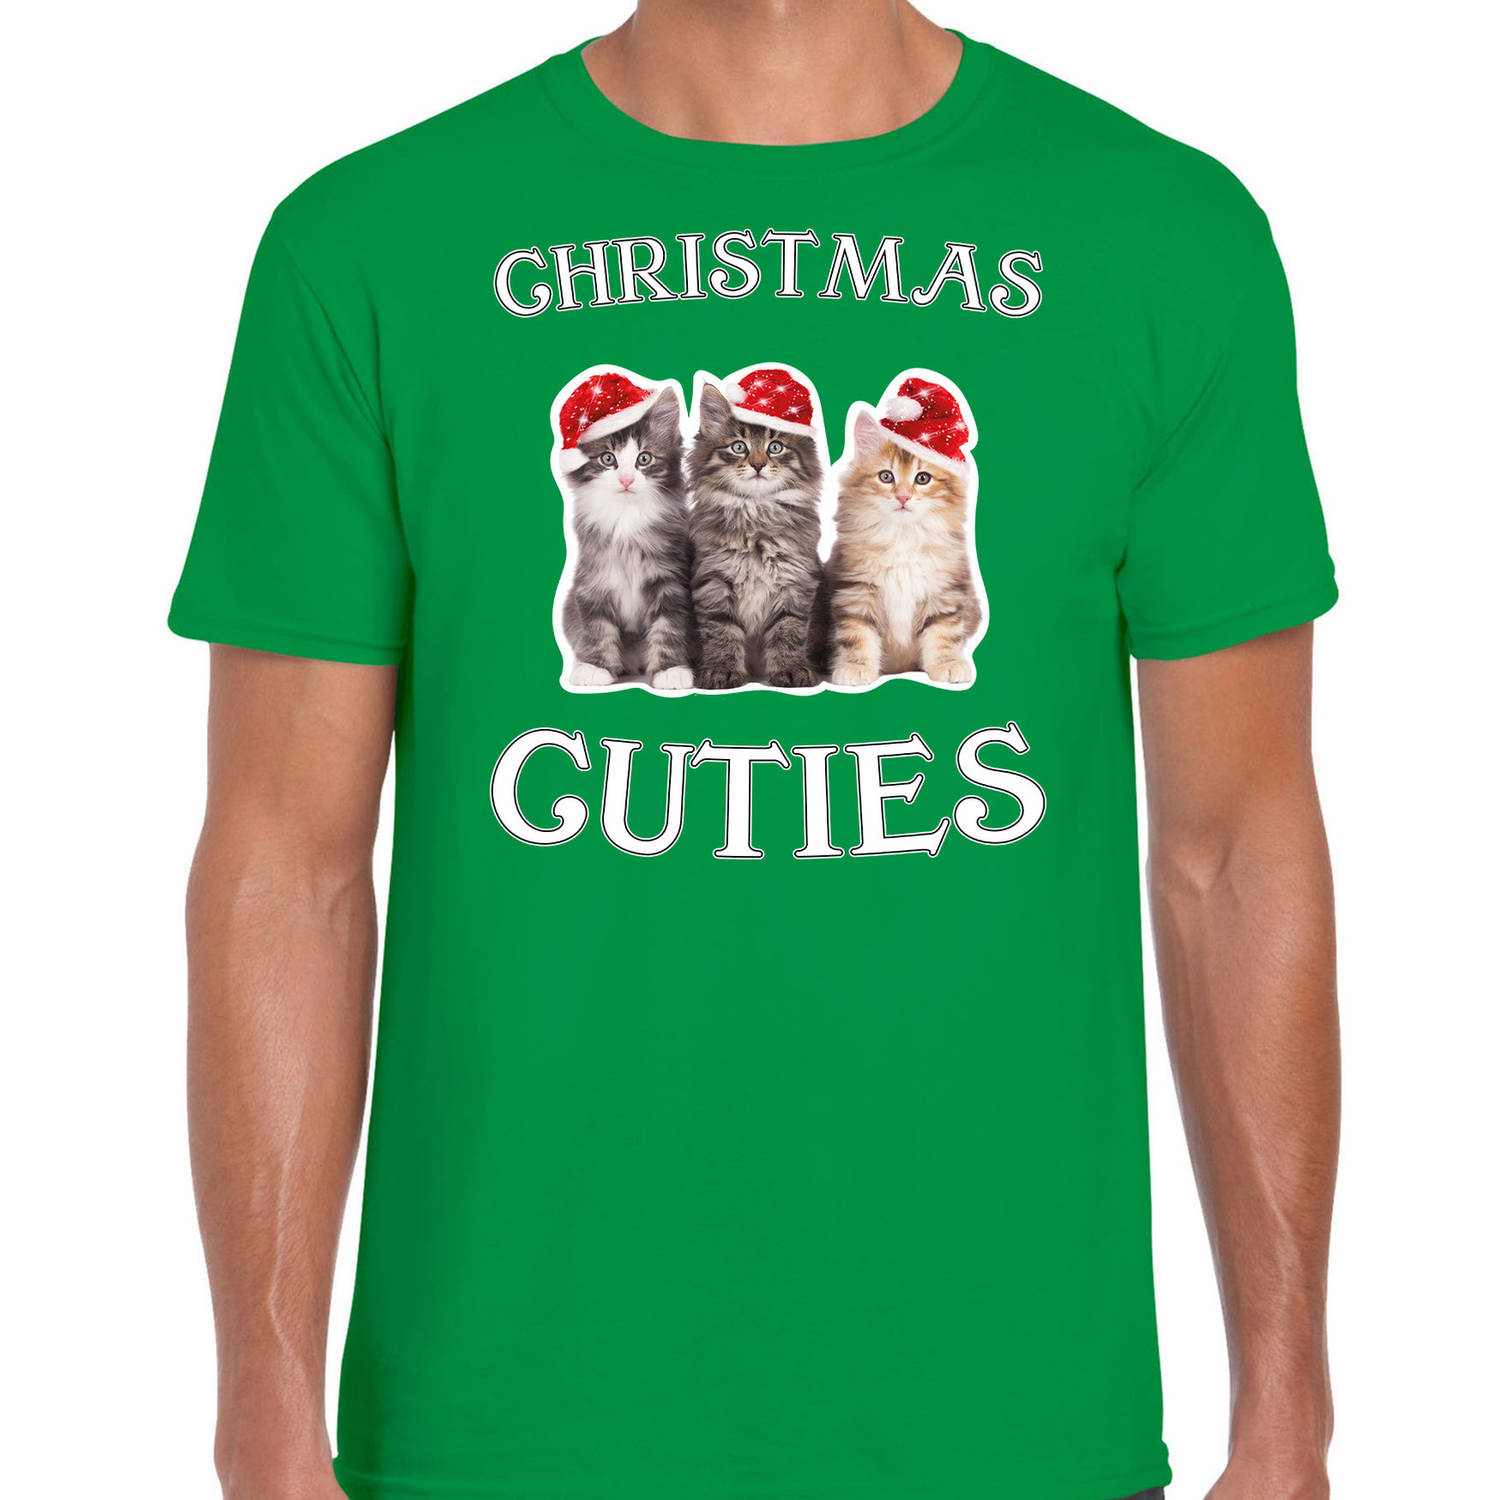 Groen Kerstshirt / Kerstkleding Christmas cuties voor heren L - kerst t-shirts